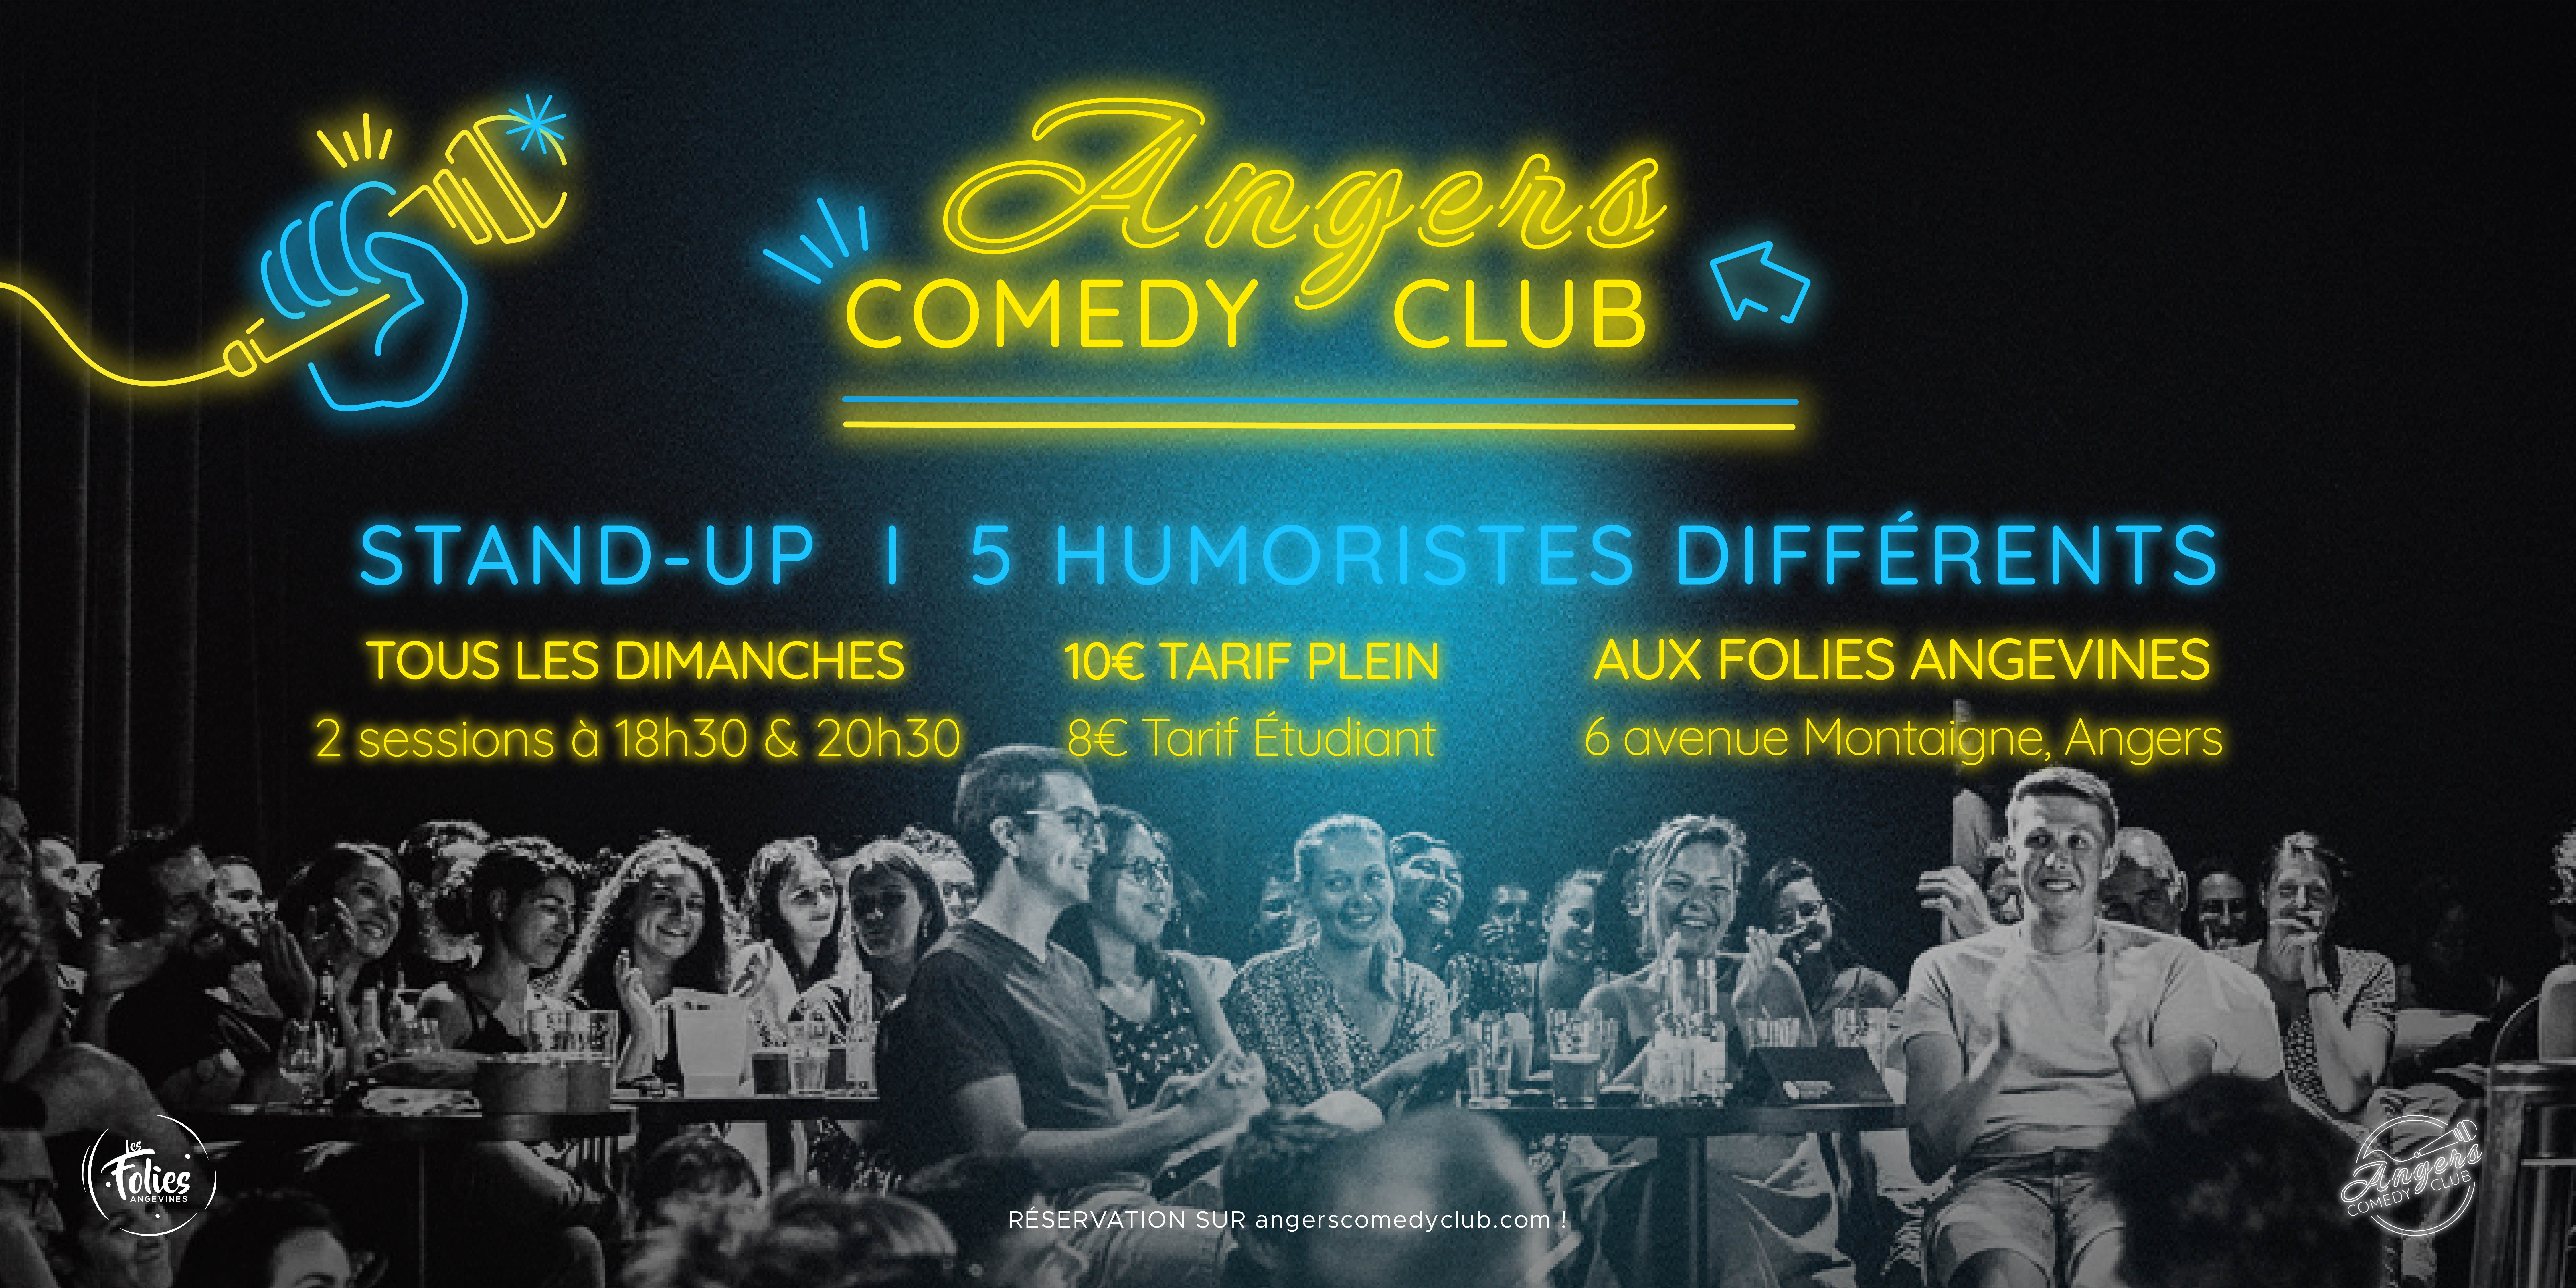 Image de Angers Comedy Club à Les Folies Angevines - Angers